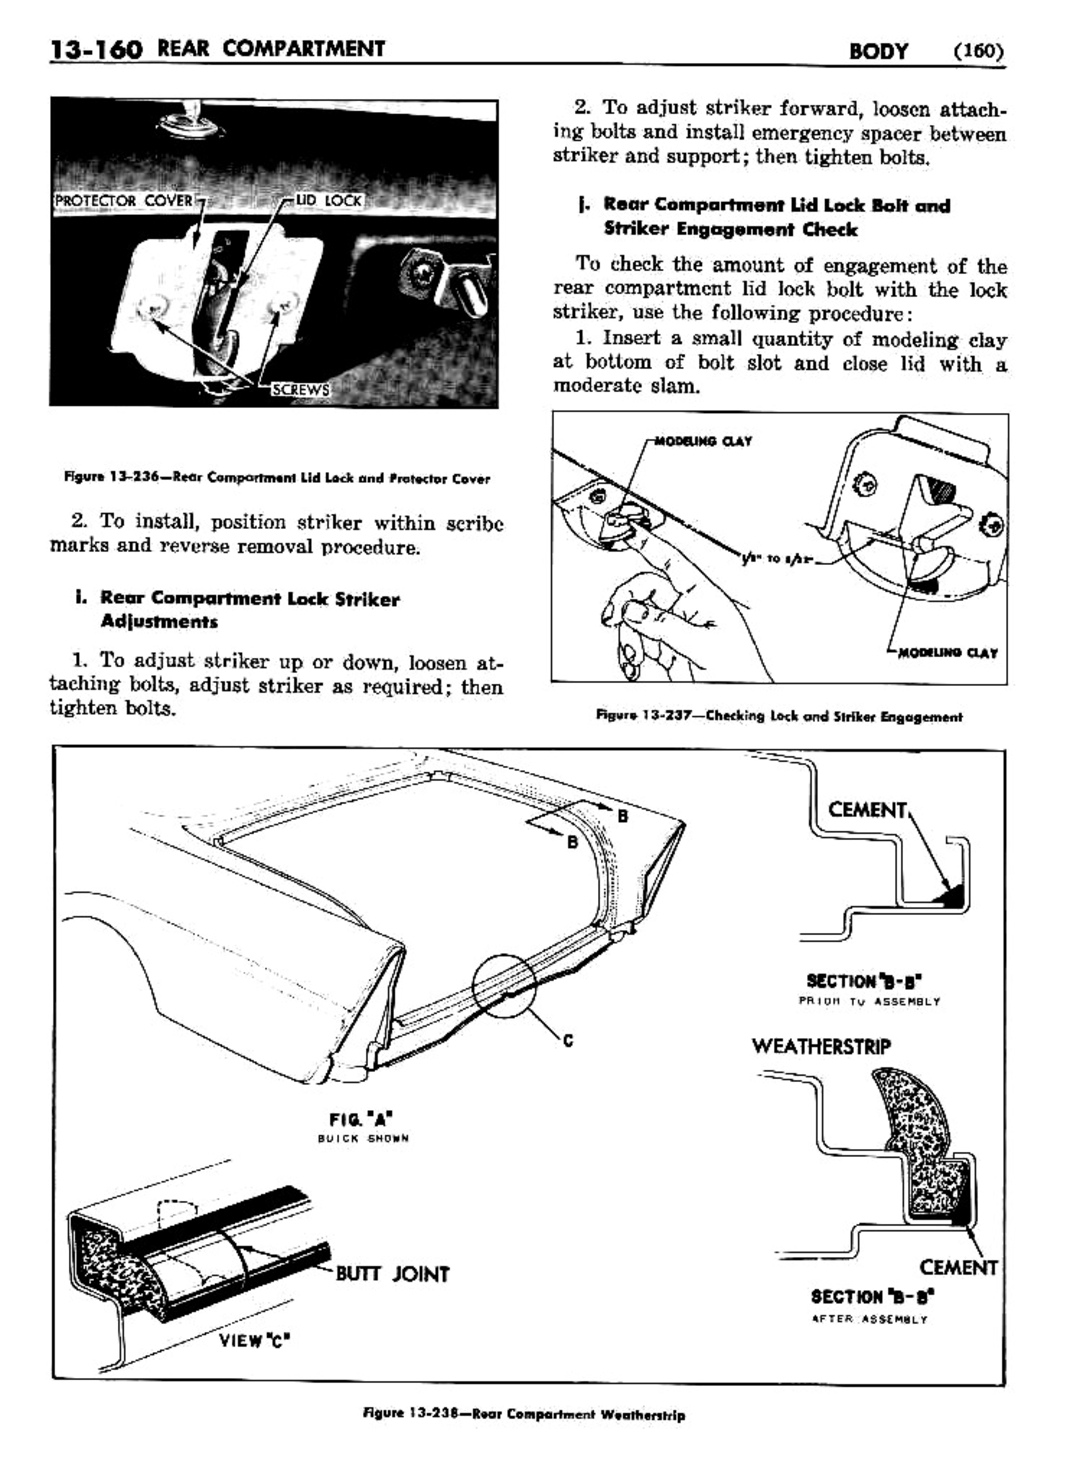 n_1957 Buick Body Service Manual-162-162.jpg